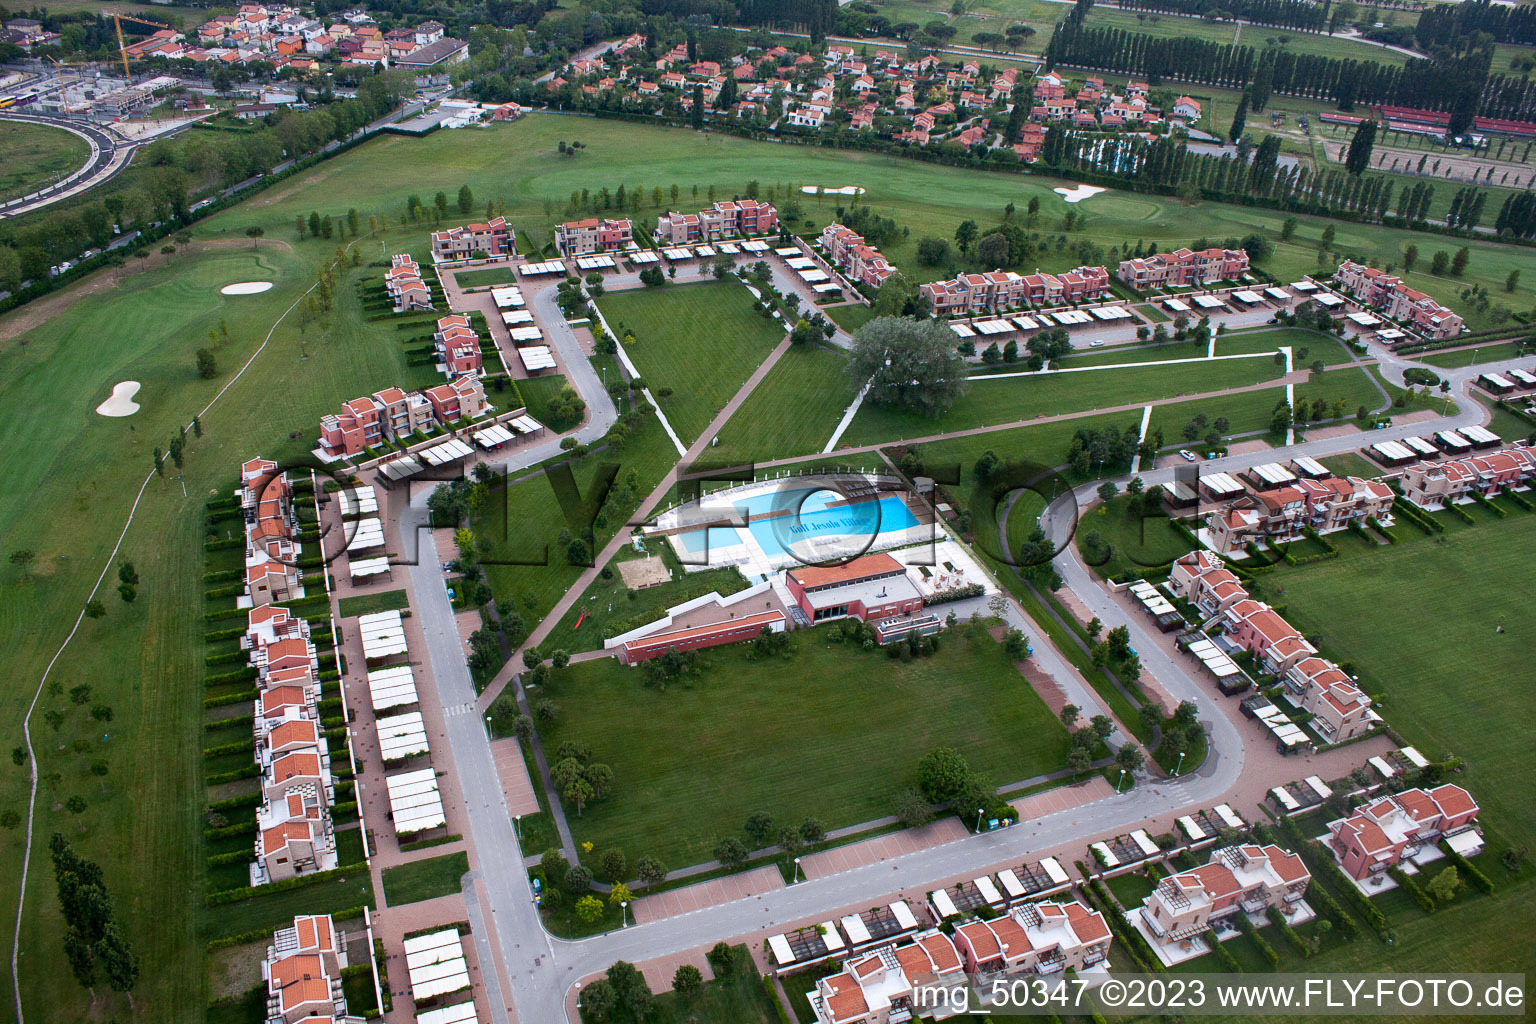 Lido di Jesolo in the state Veneto, Italy seen from above